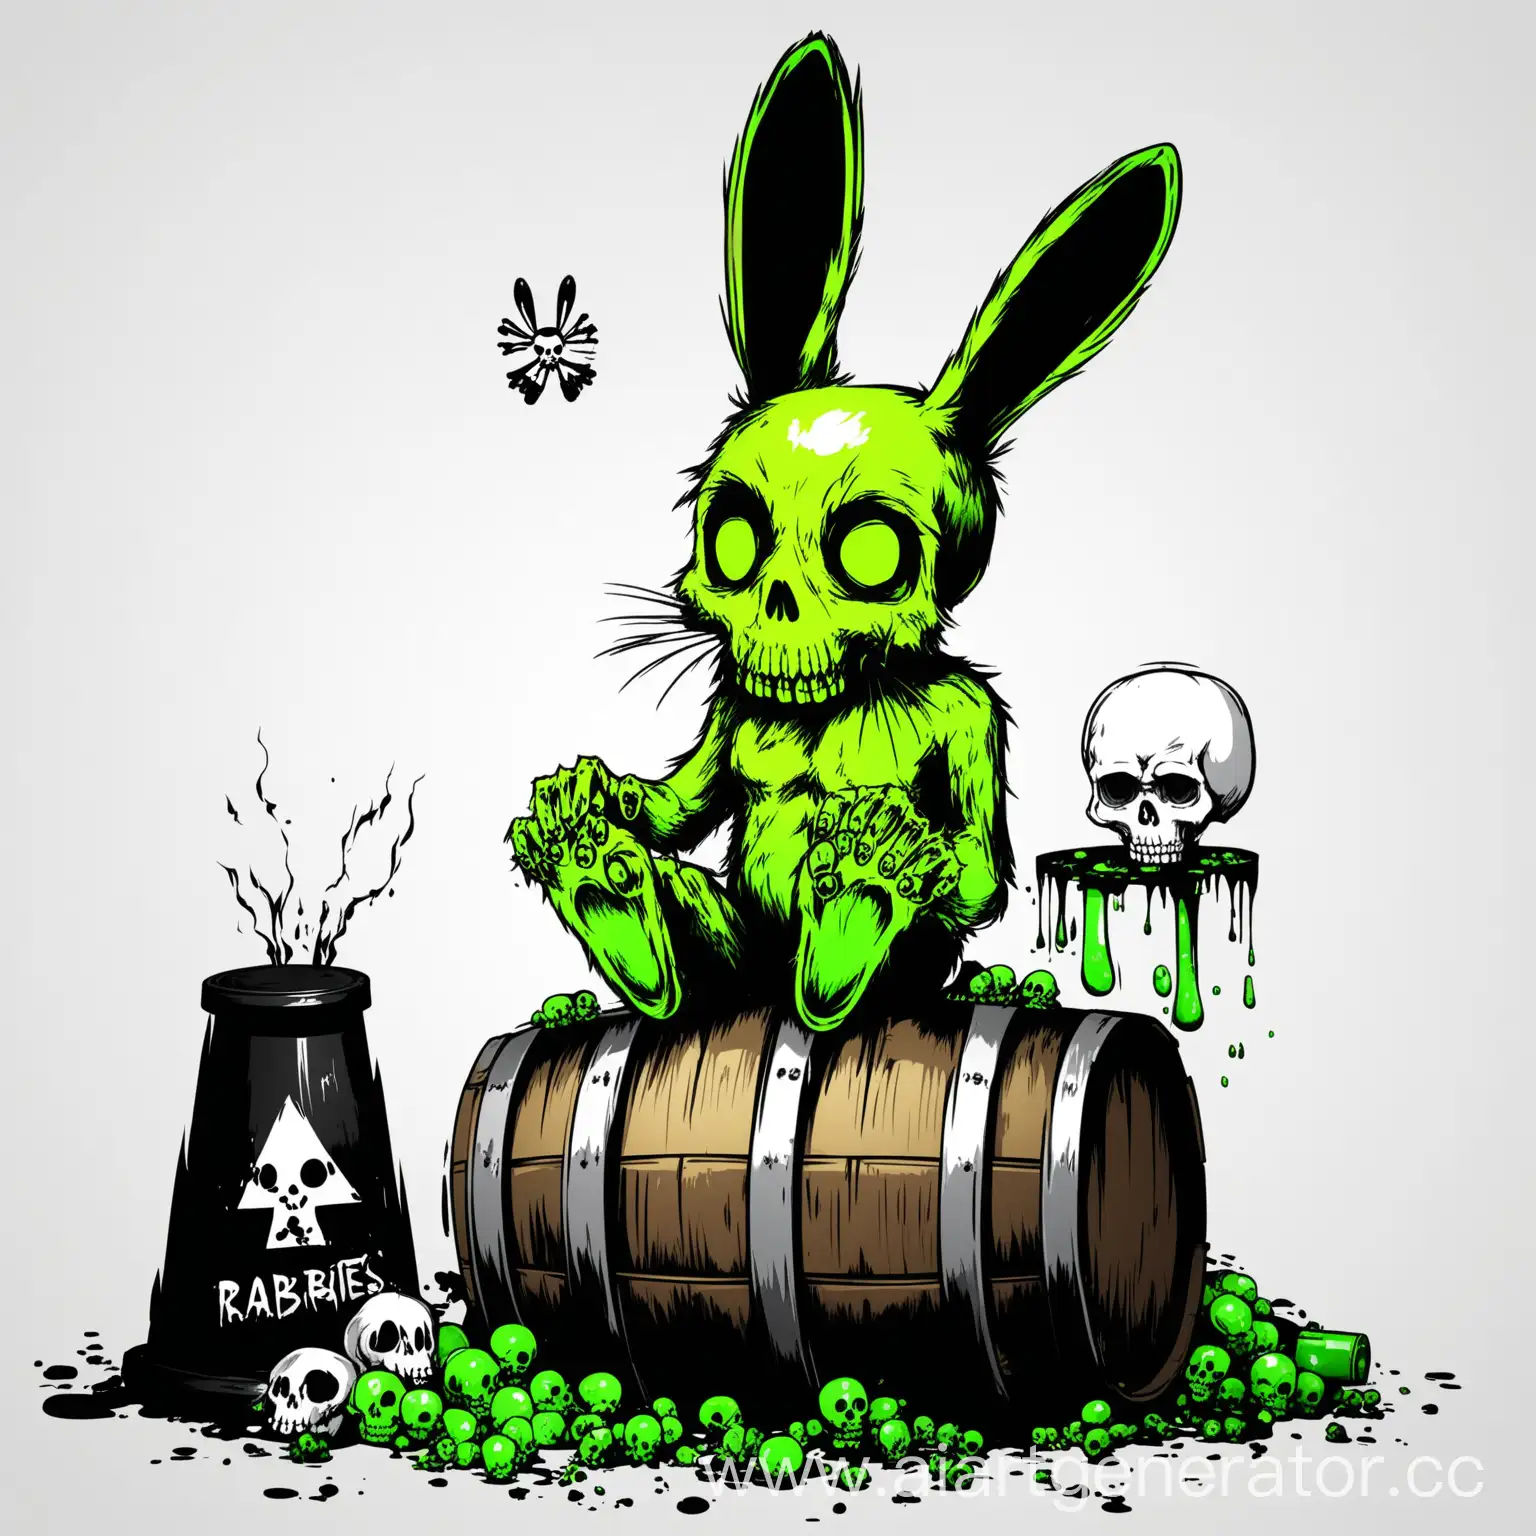 Radioactive-Rabbit-with-Toxins-and-Skull-Eerie-Wildlife-Portrait